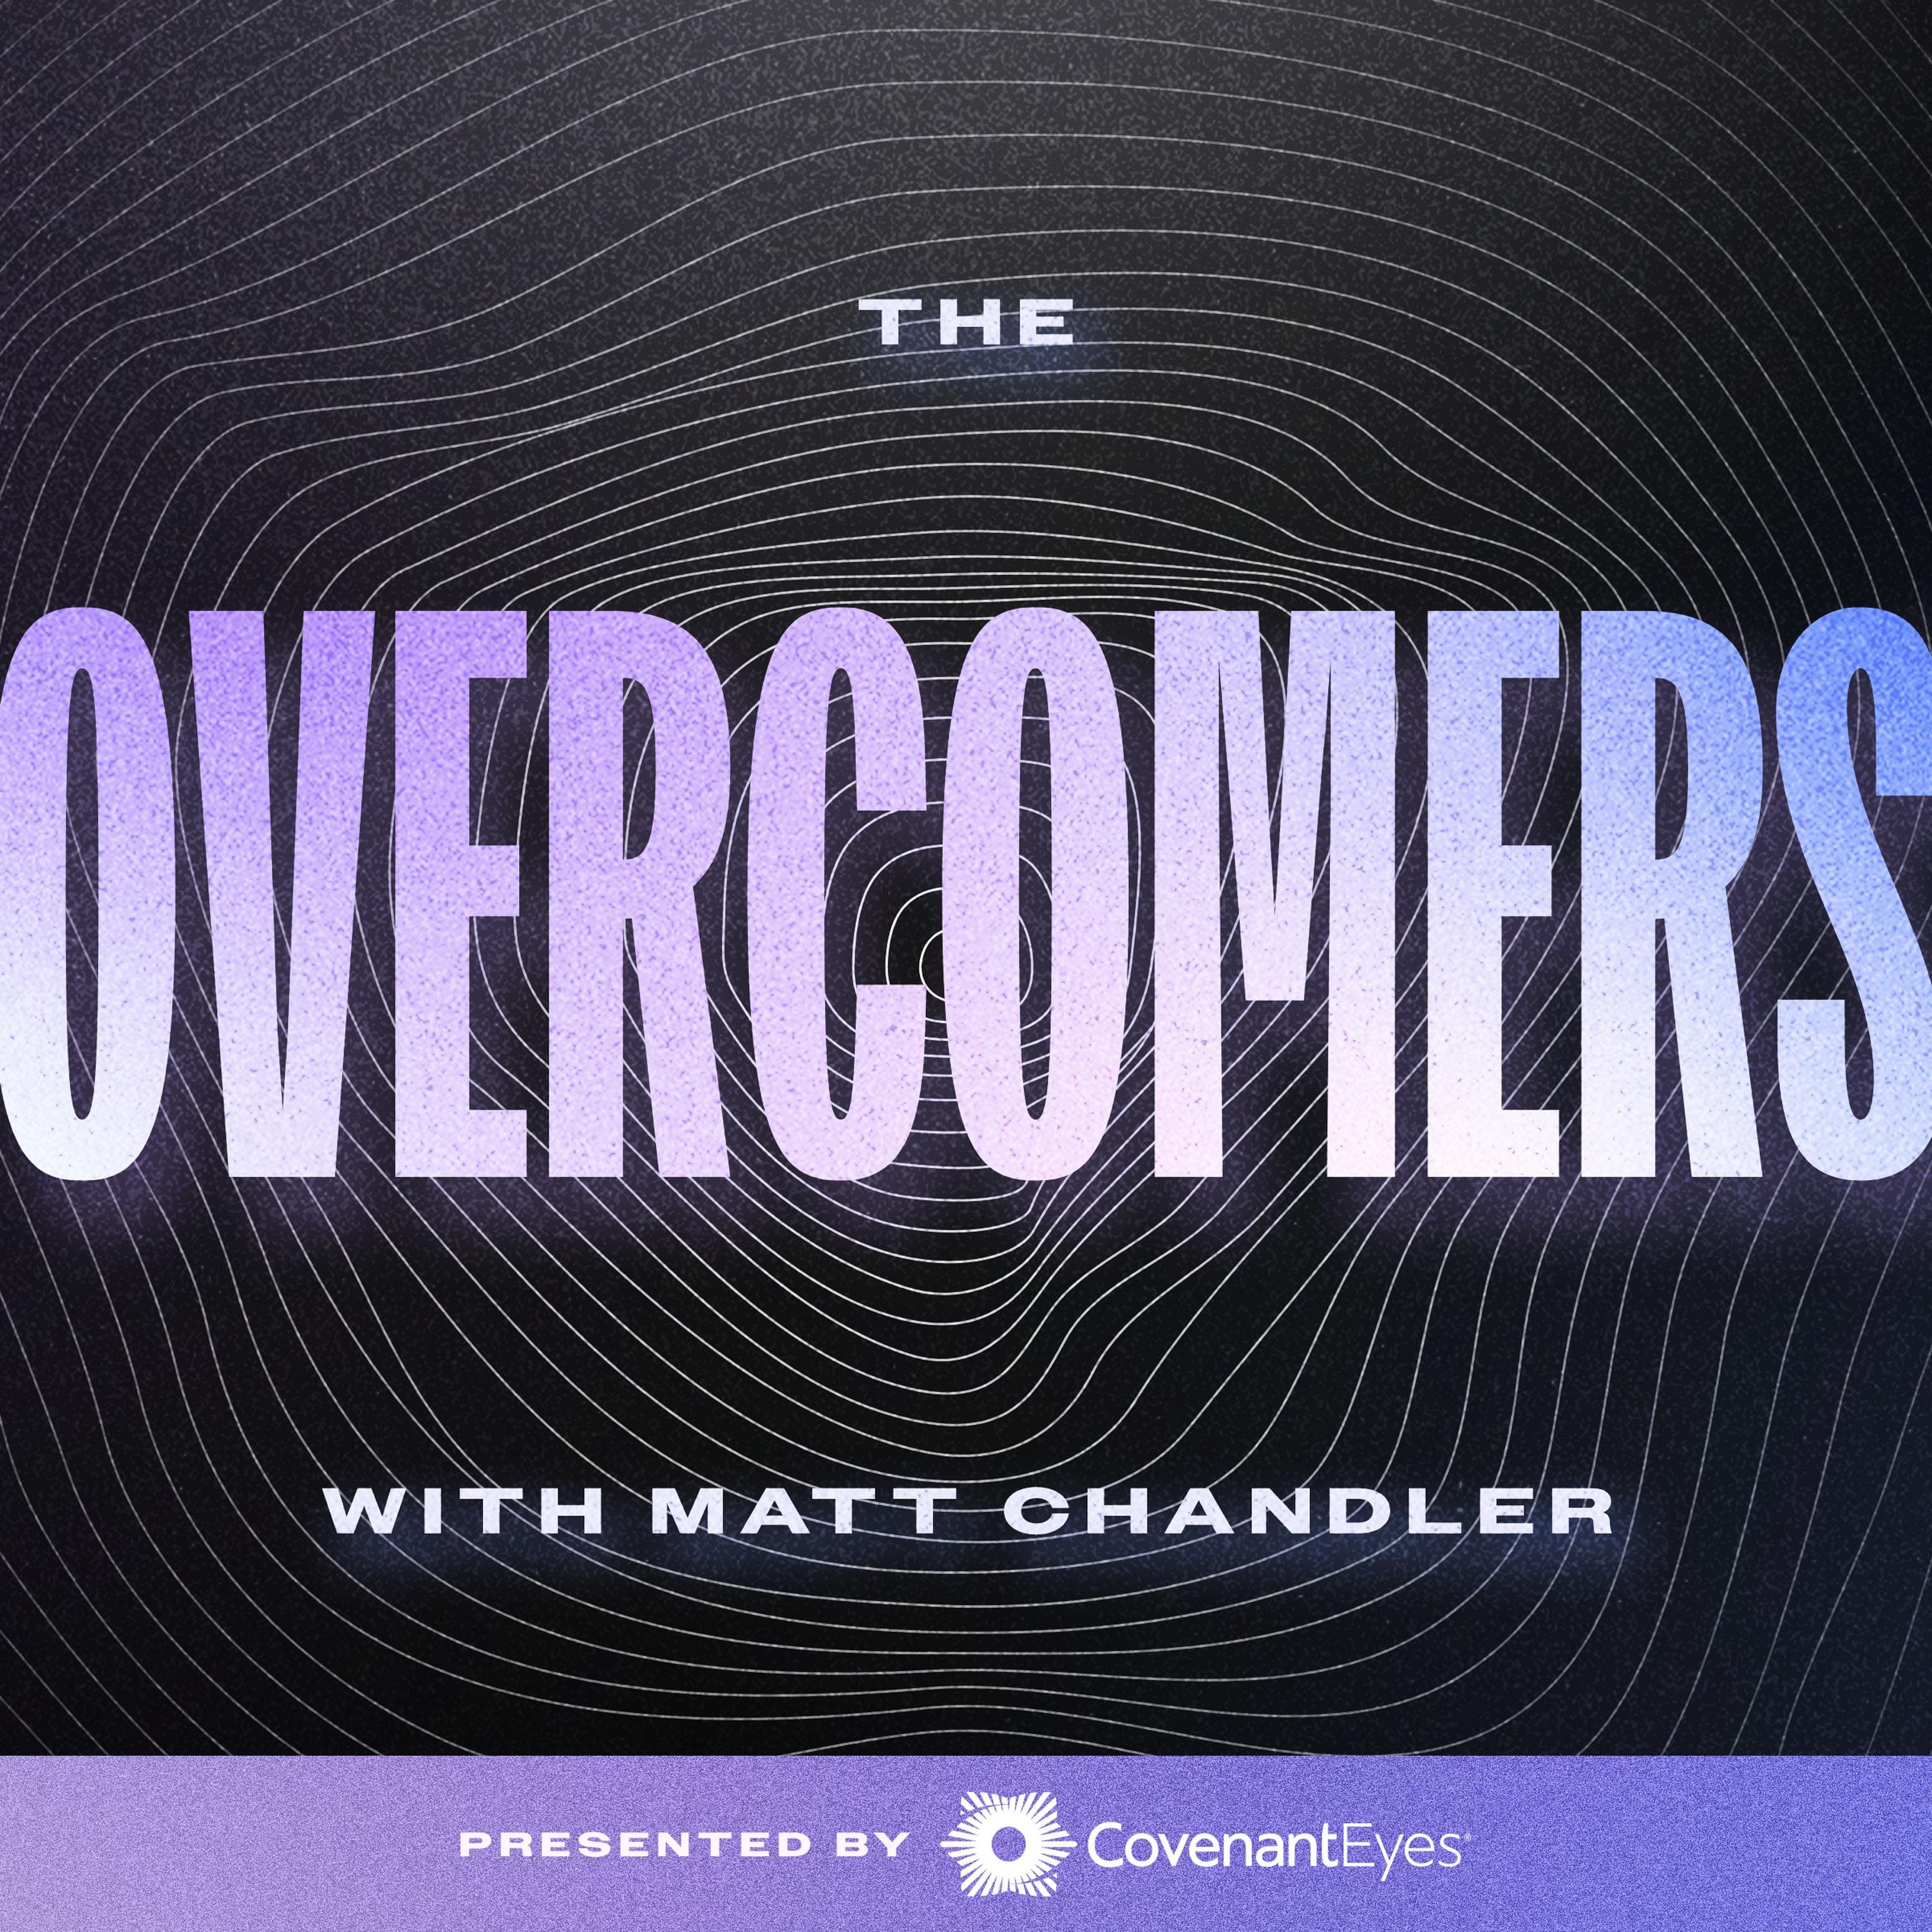 The Overcomers with Matt Chandler